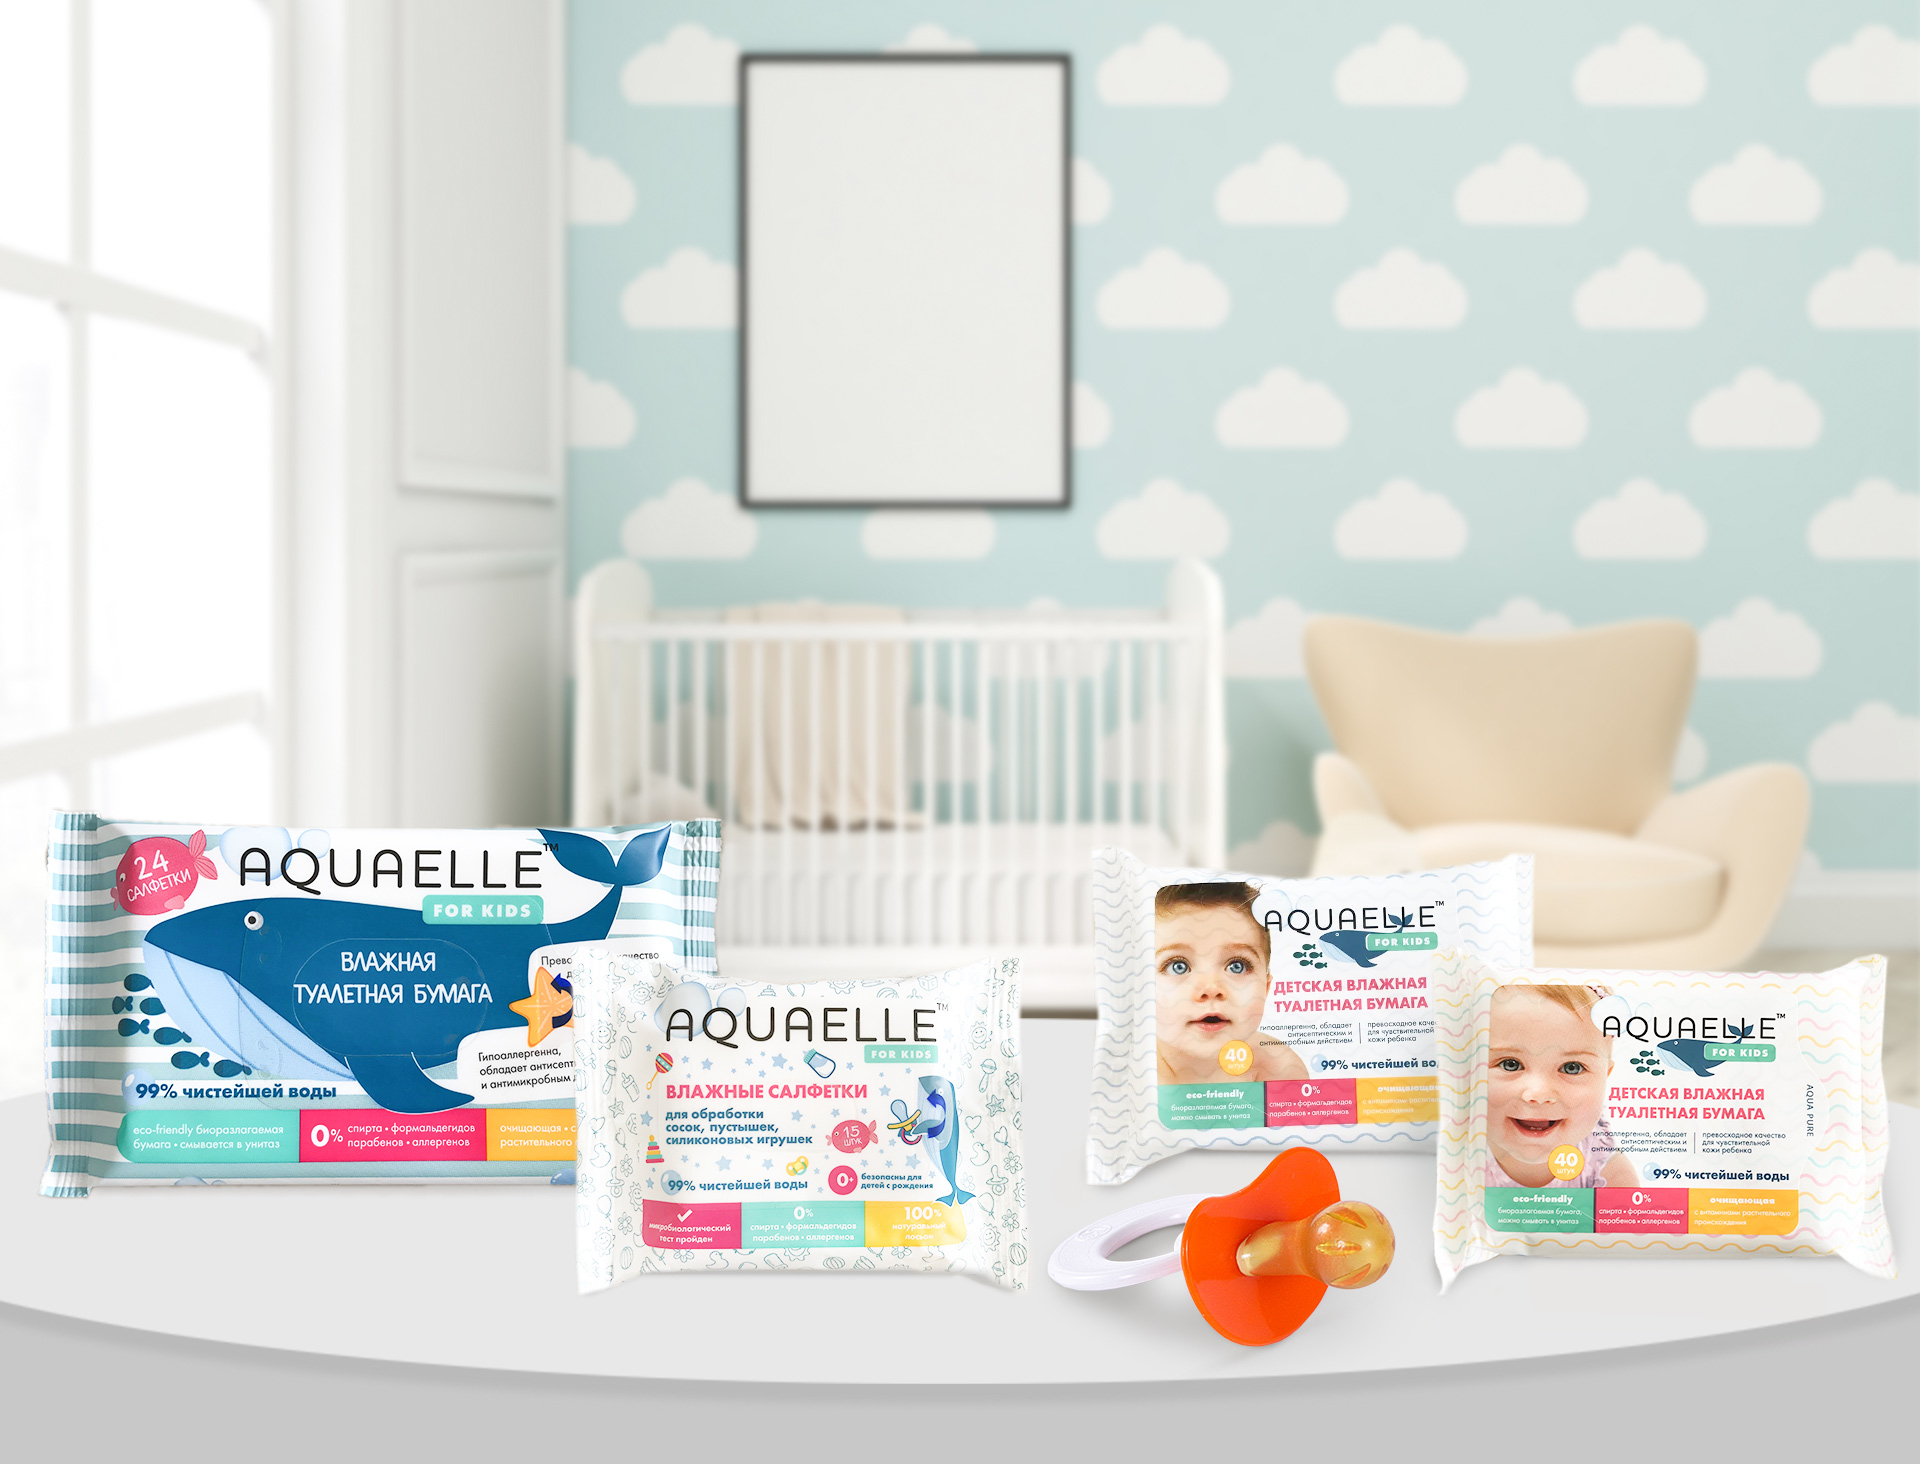 Aquaelle for kids - what modern parents want!